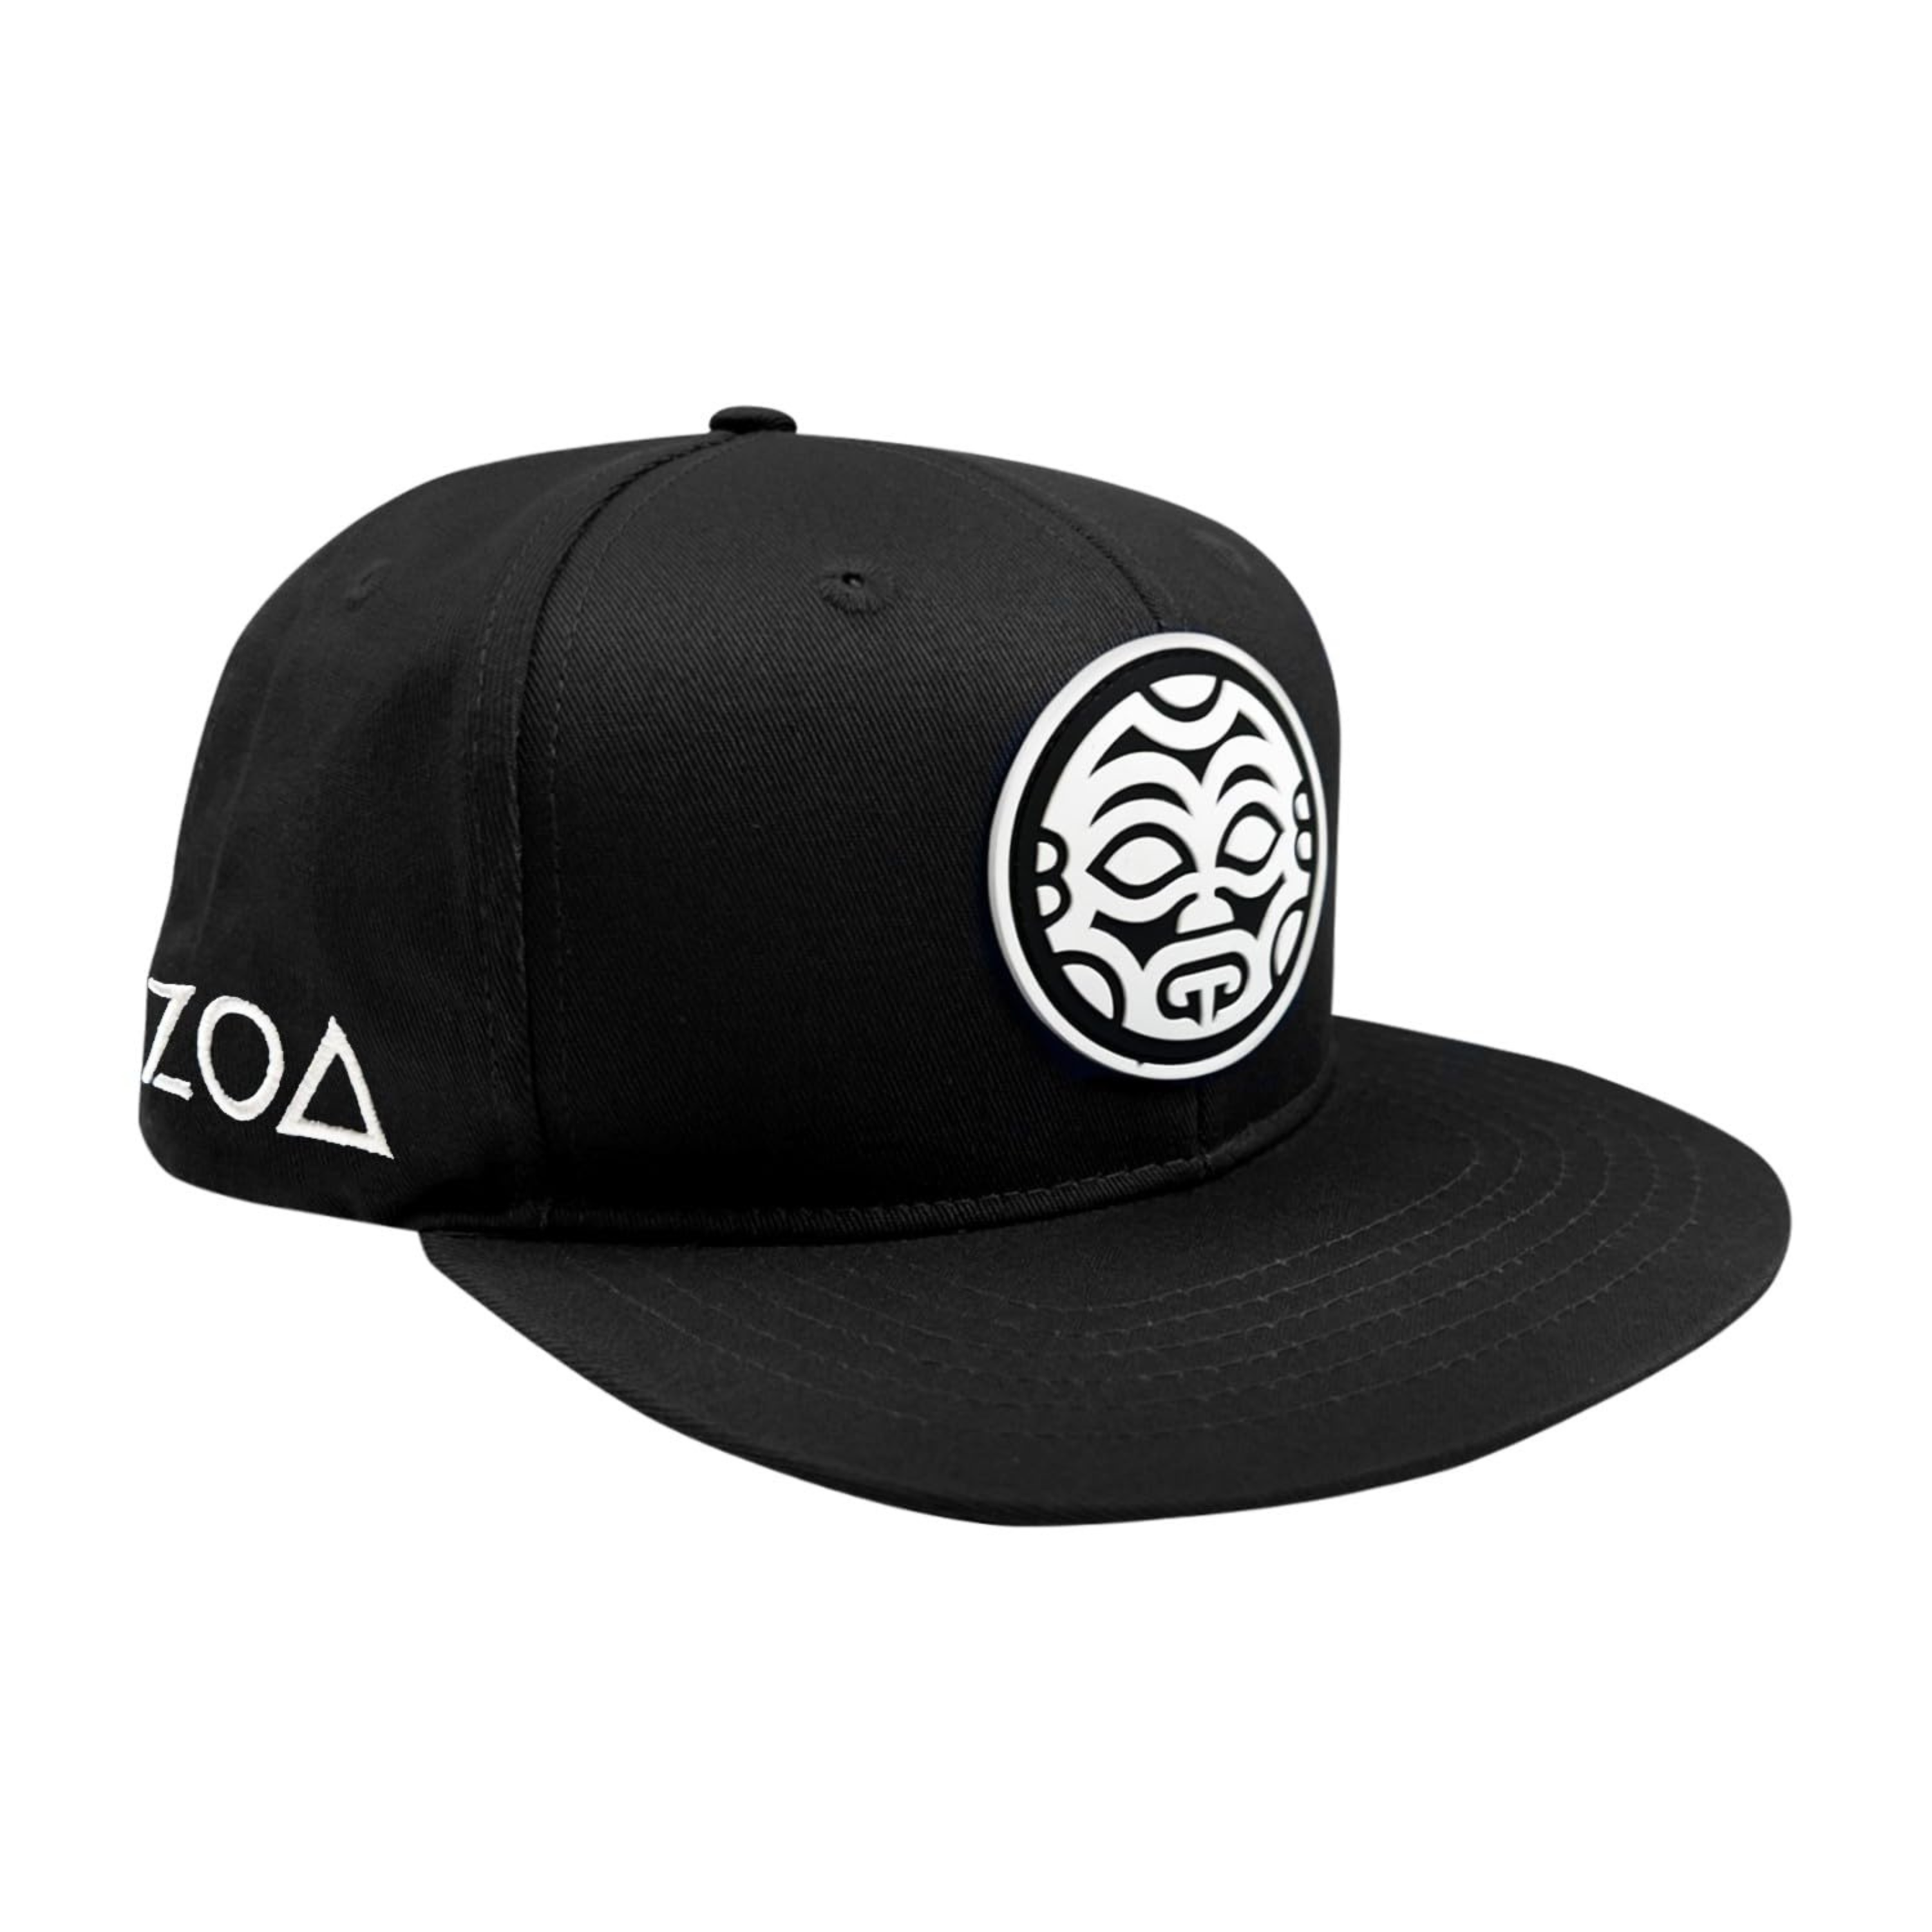 ZOA Mask Hat Black Snapback